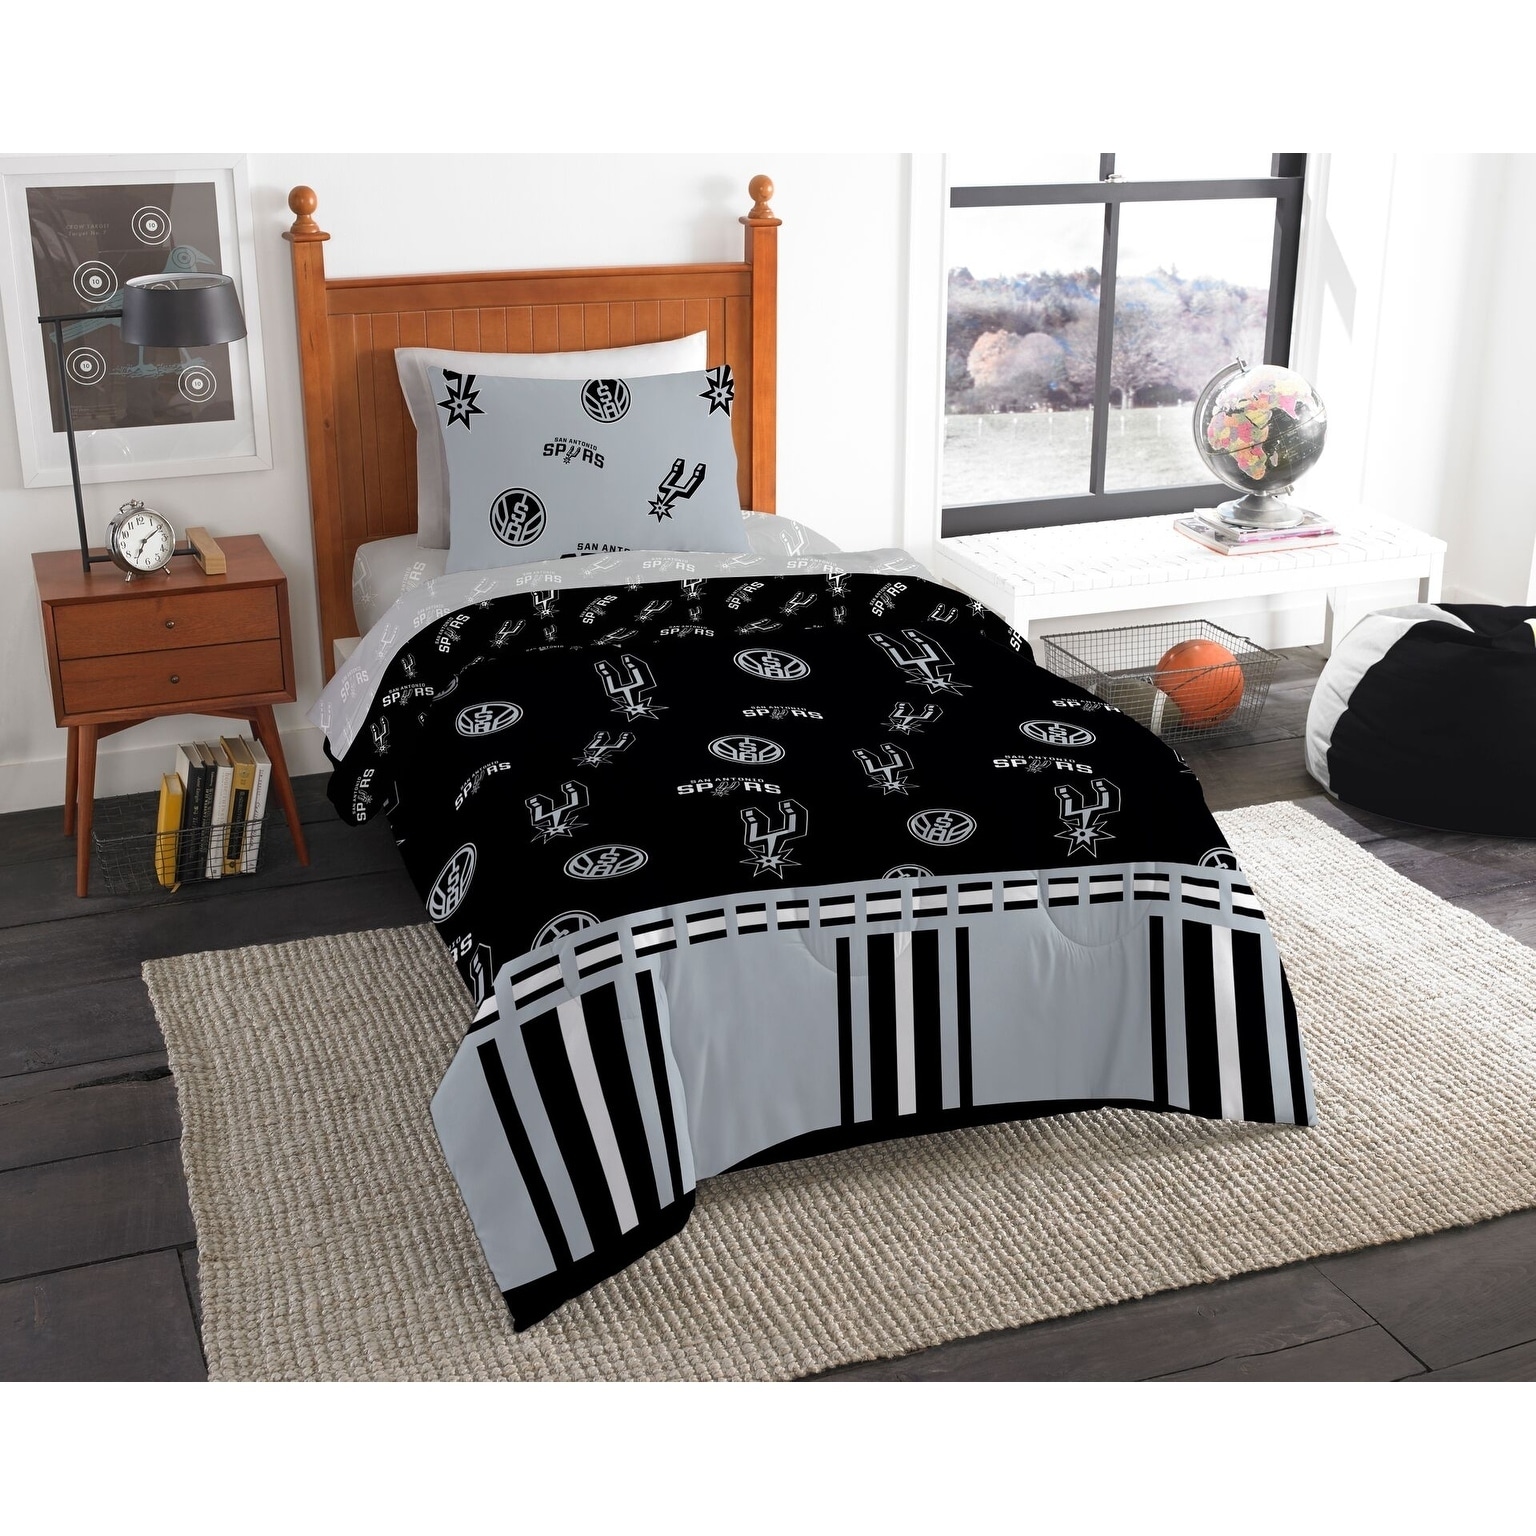 Shop Nba 808 San Antonio Spurs Twin Bed In A Bag Set On Sale